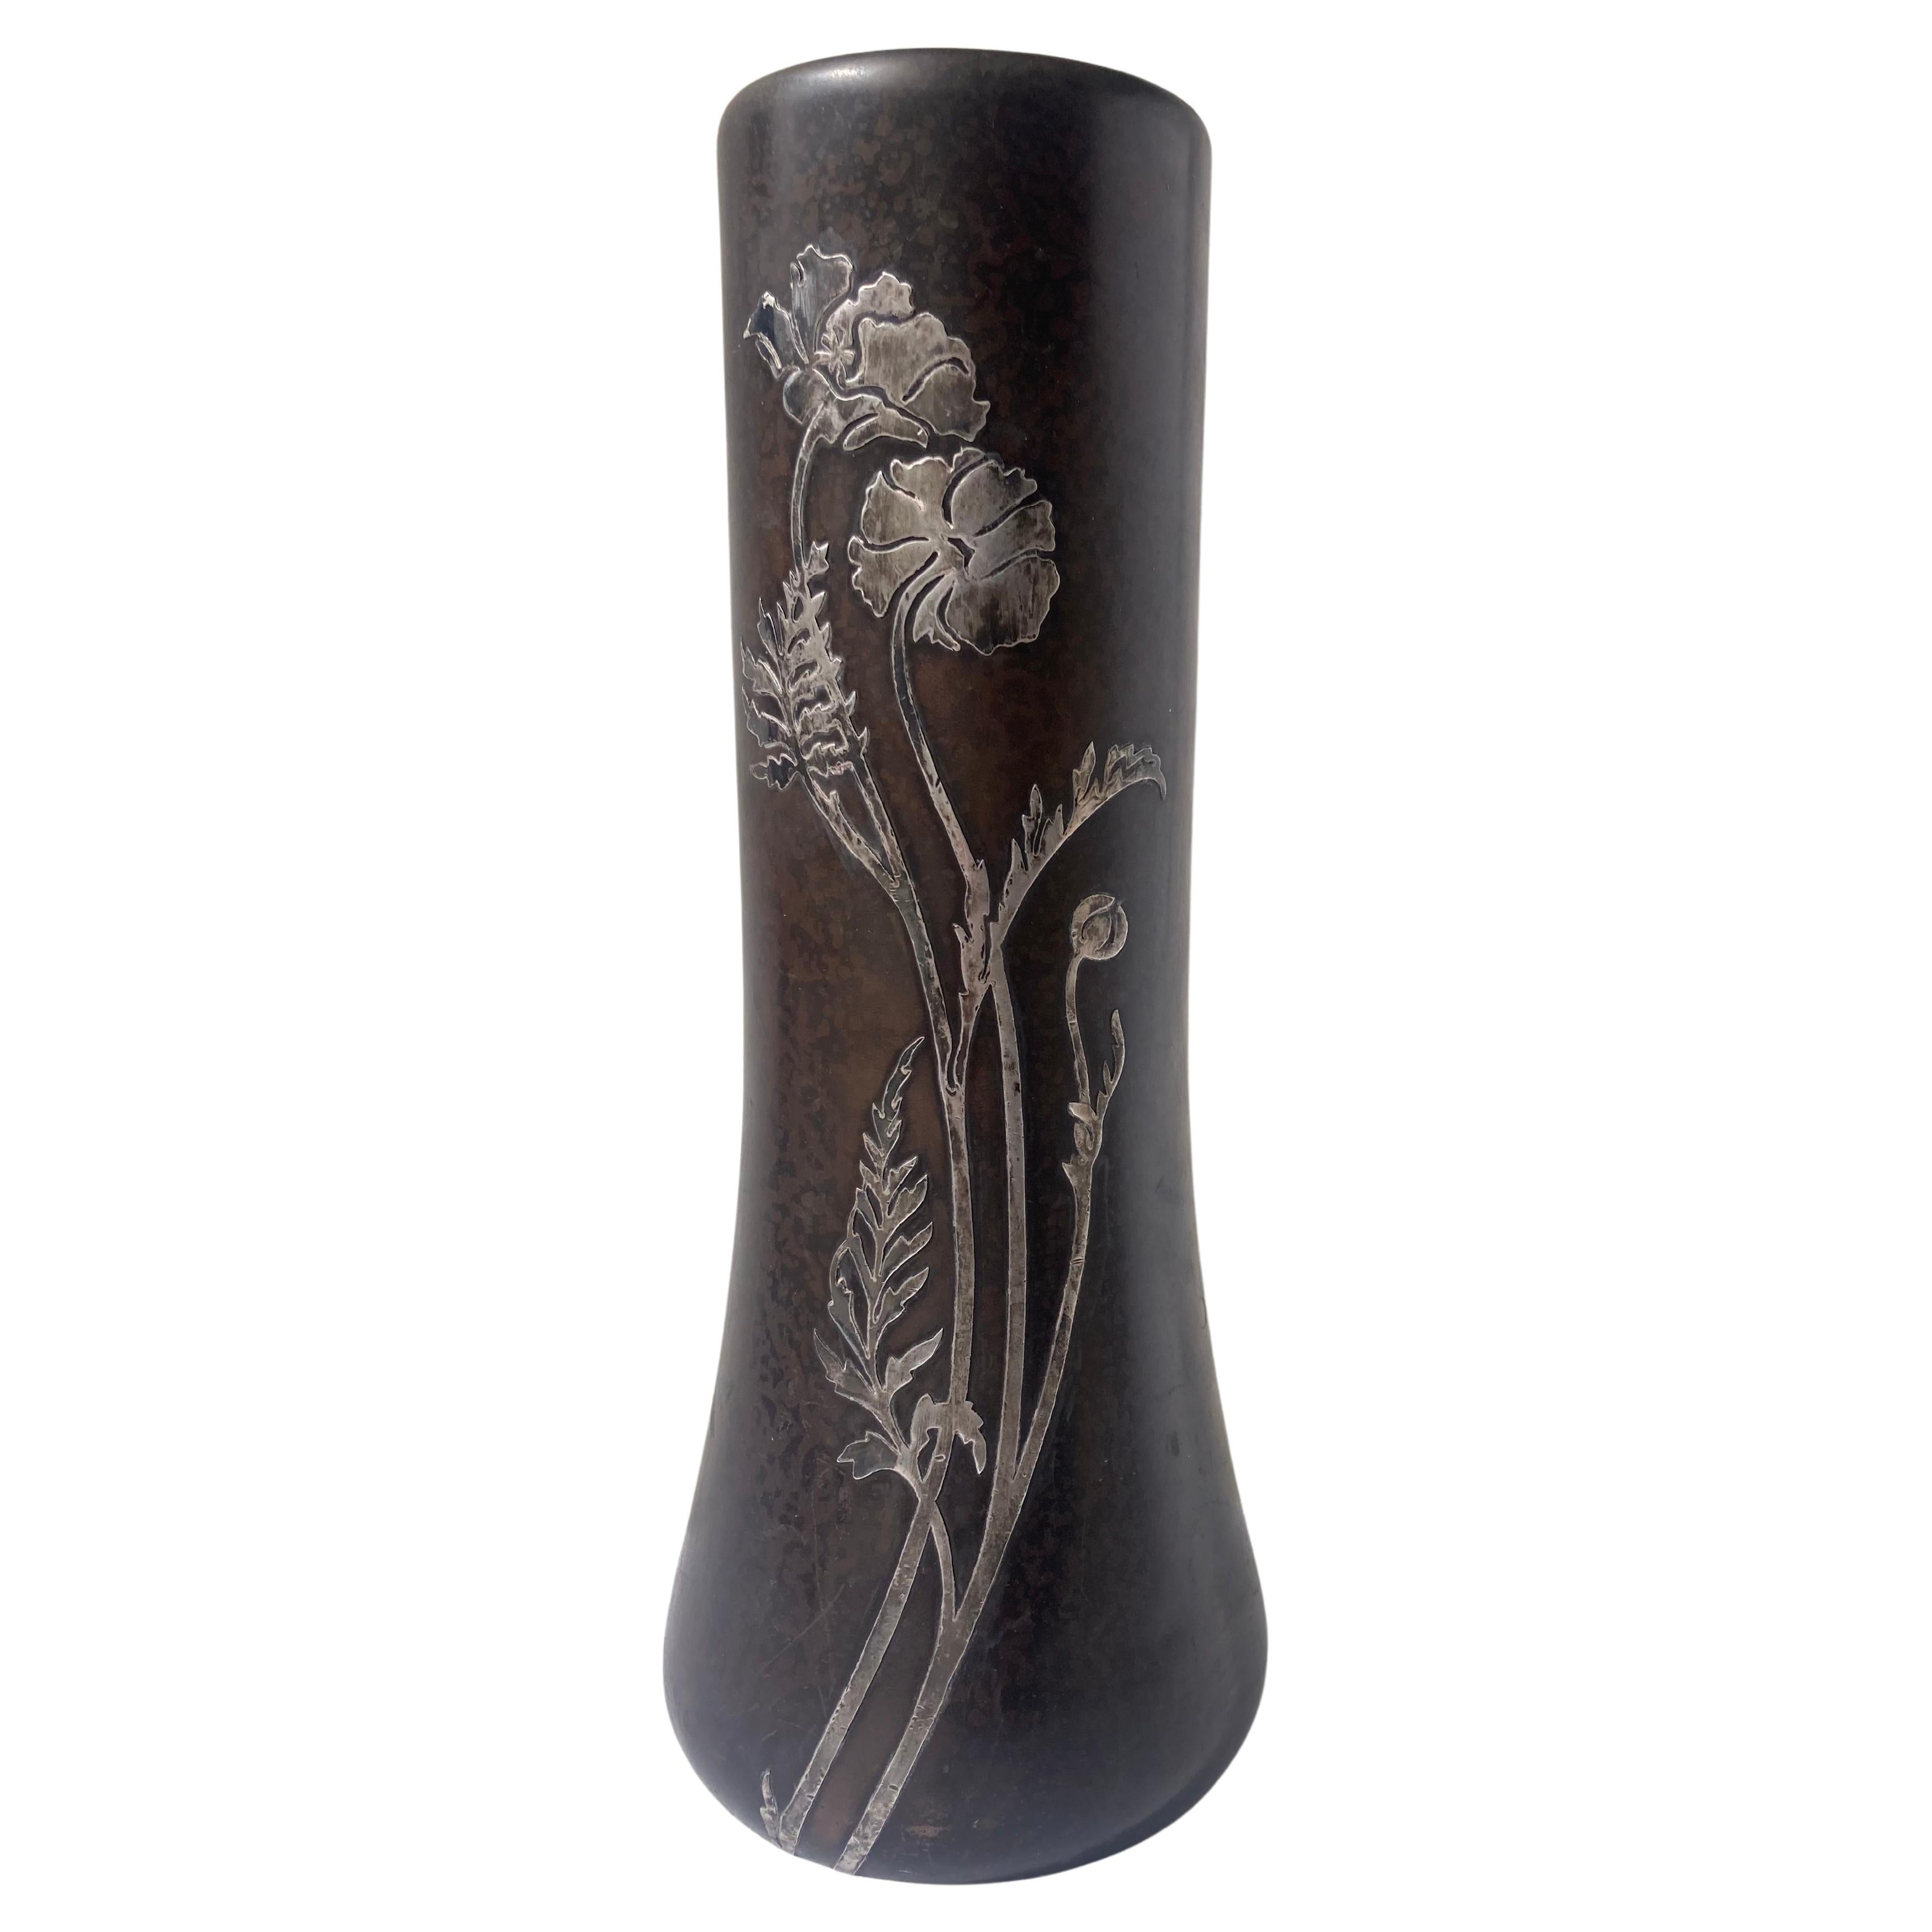 Heintz sterling silver overlay on bronze Arts & Crafts vase. For Sale